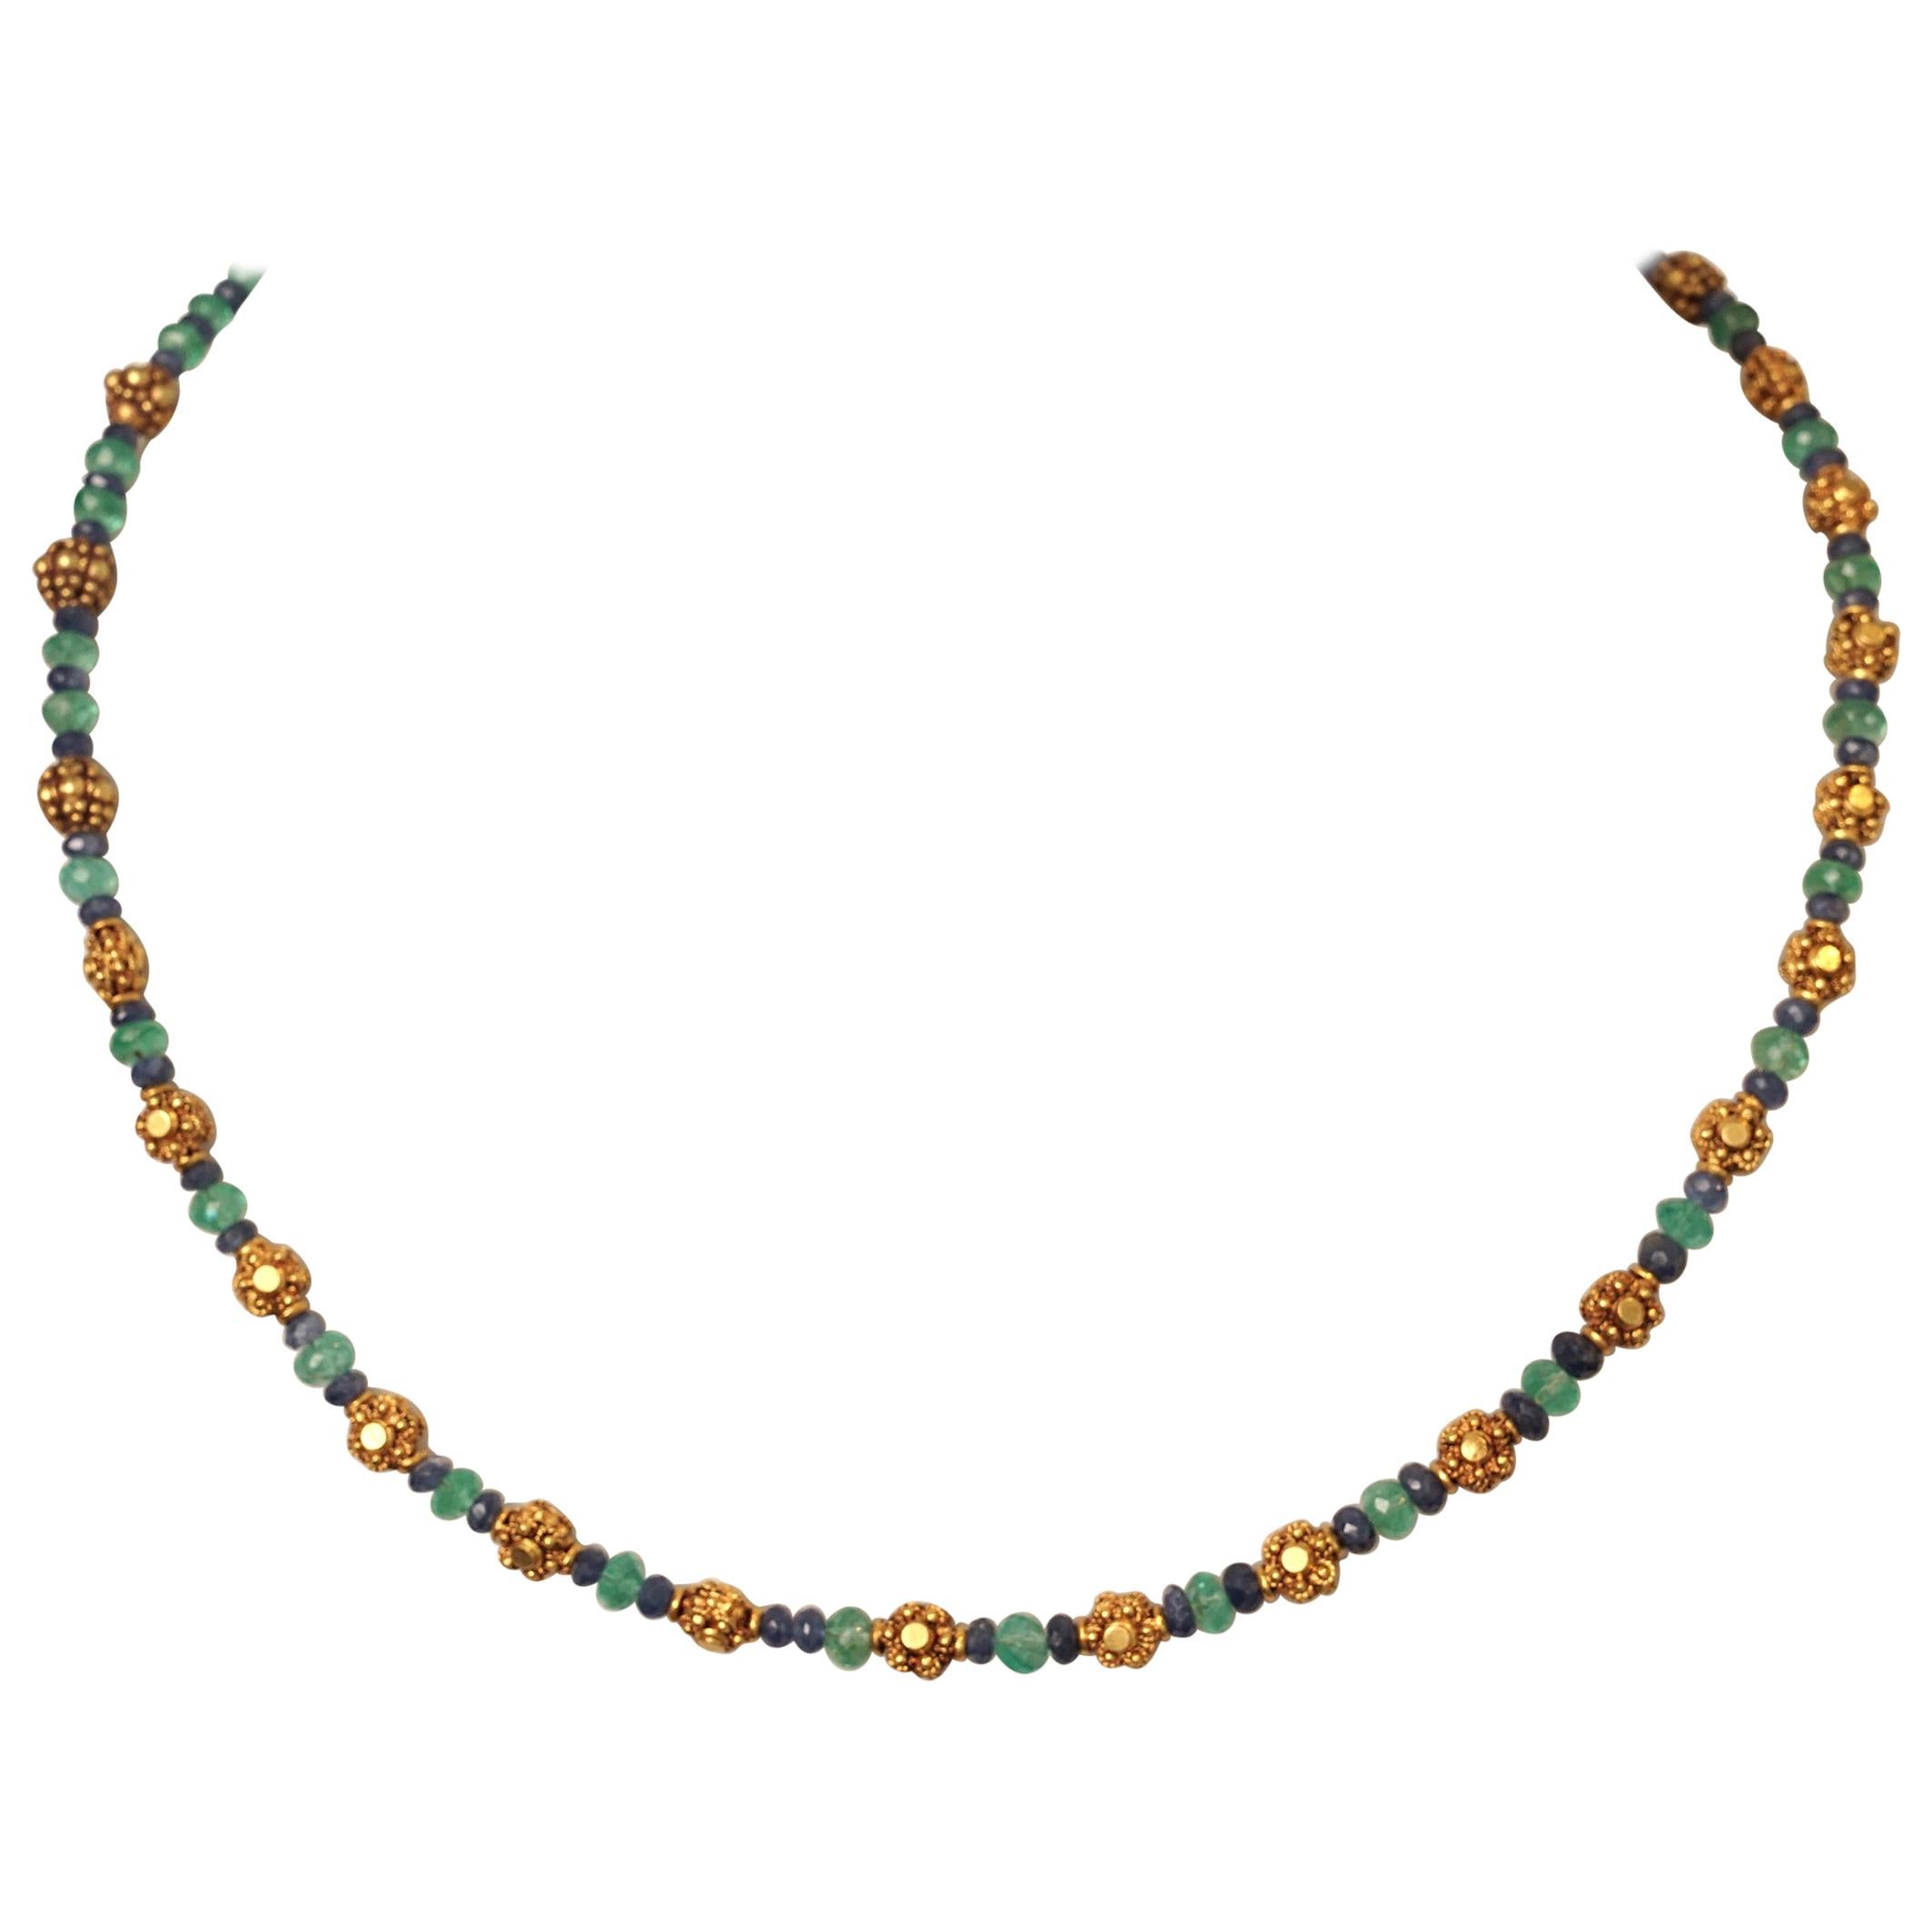 22 Karat Gold Sapphire and Emerald Necklace by Deborah Lockhart Phillips